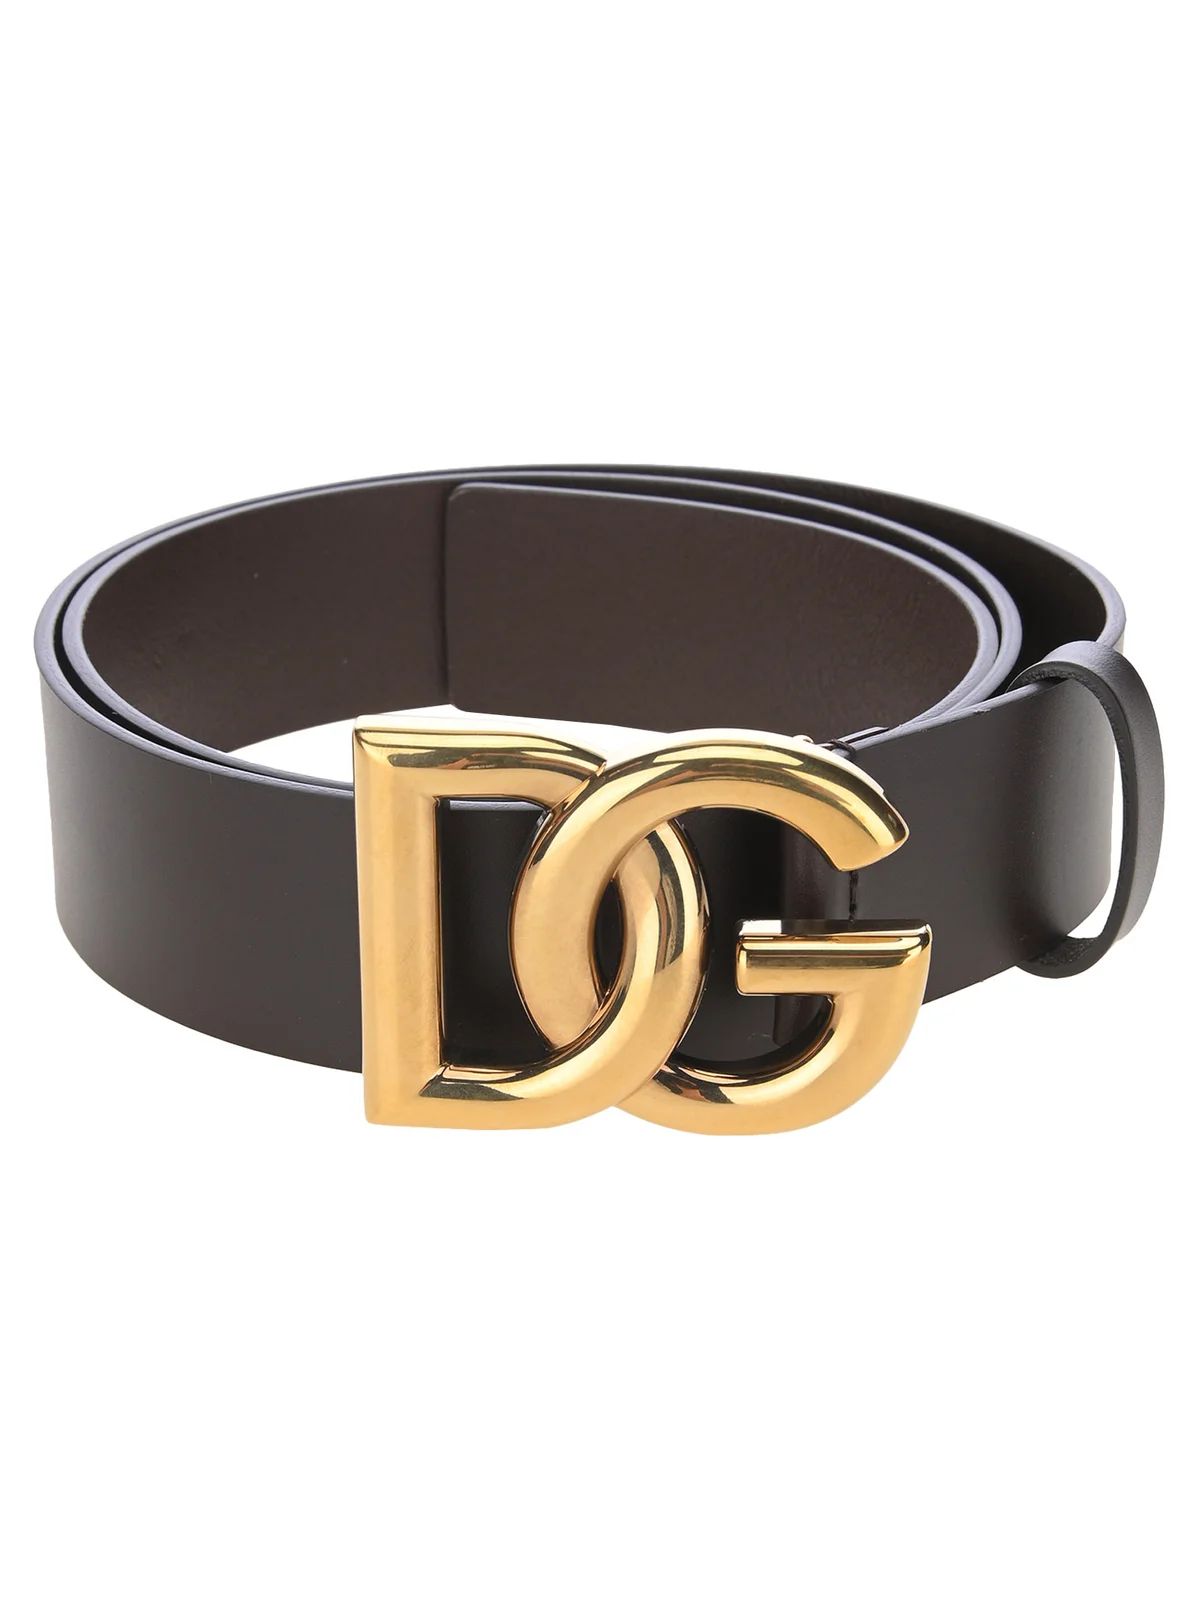 Dolce & Gabbana DG Logo Buckle Belt | Cettire Global